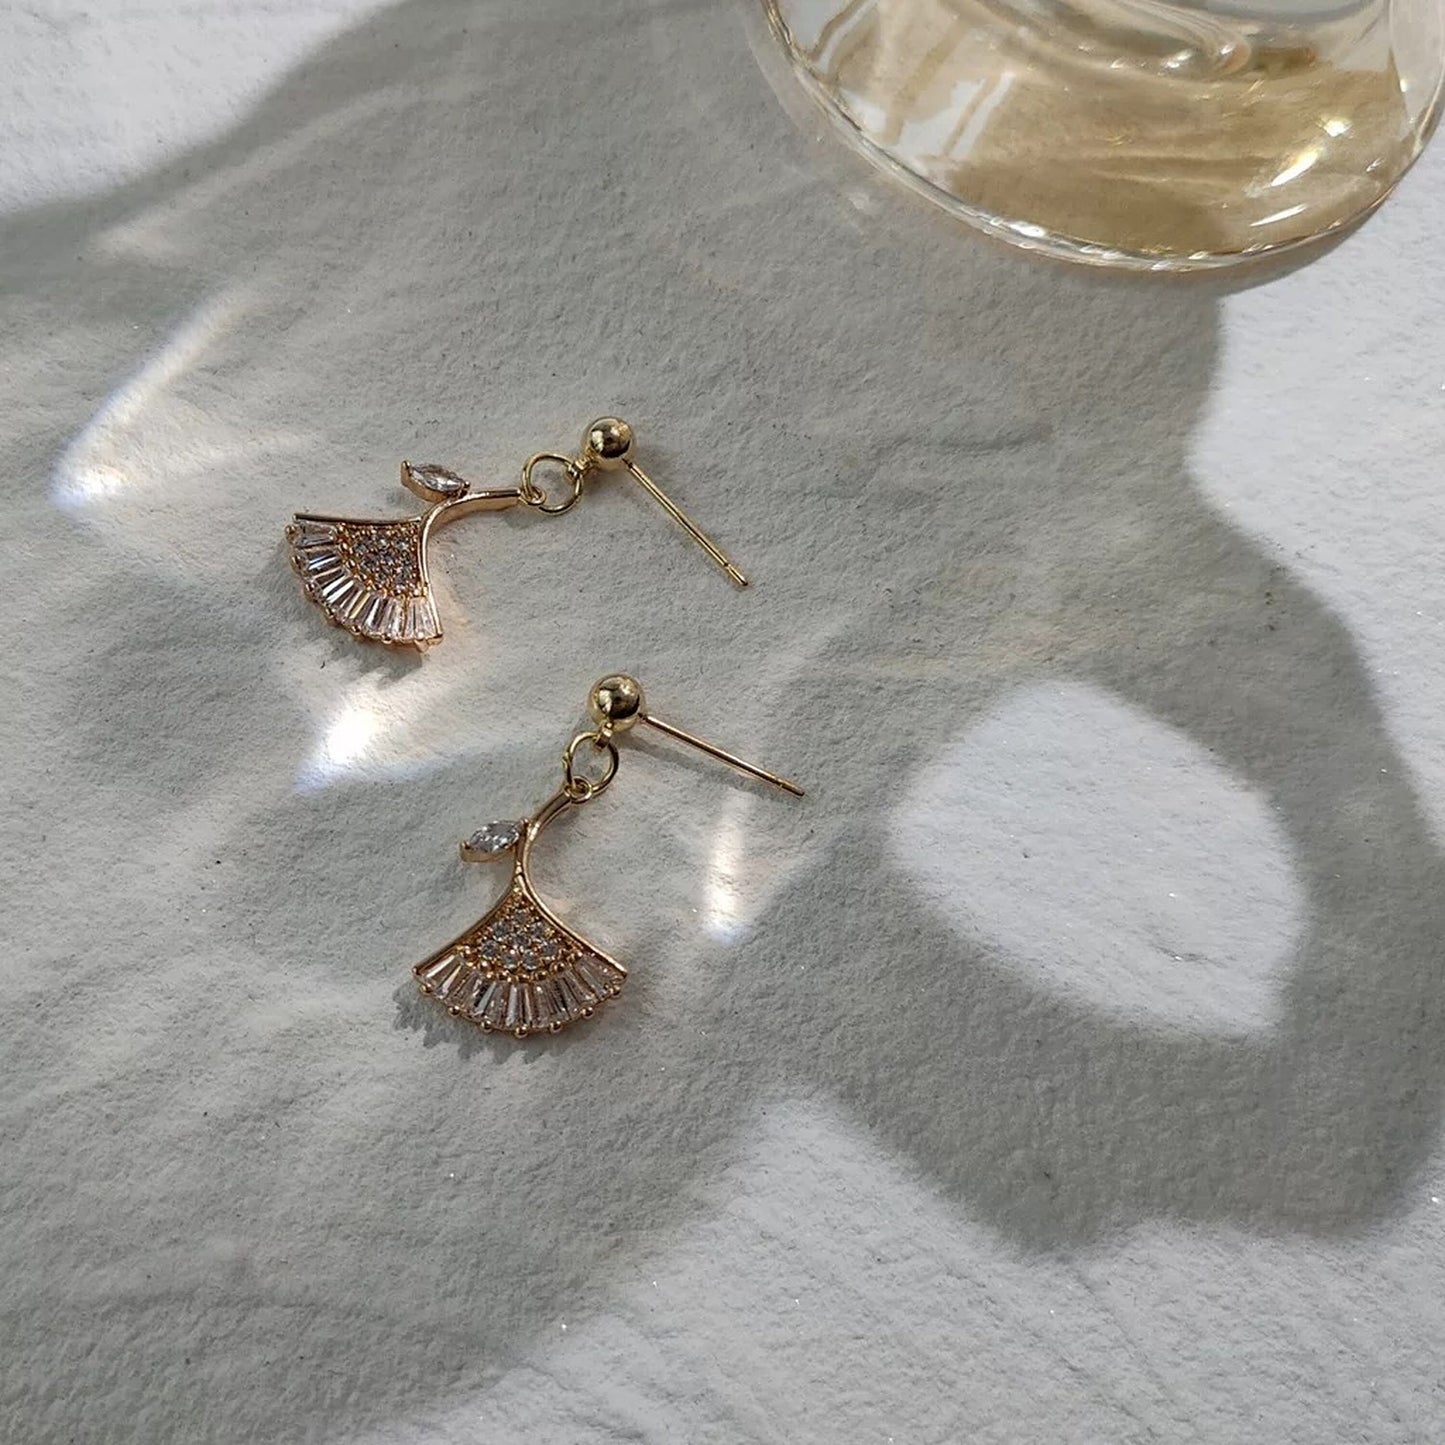 Rose gold earrings, Ginkgo leaf earrings, Botanical leaf drop earrings, 14K gold sector earrings, Delicate everyday earrings, Handmade gift